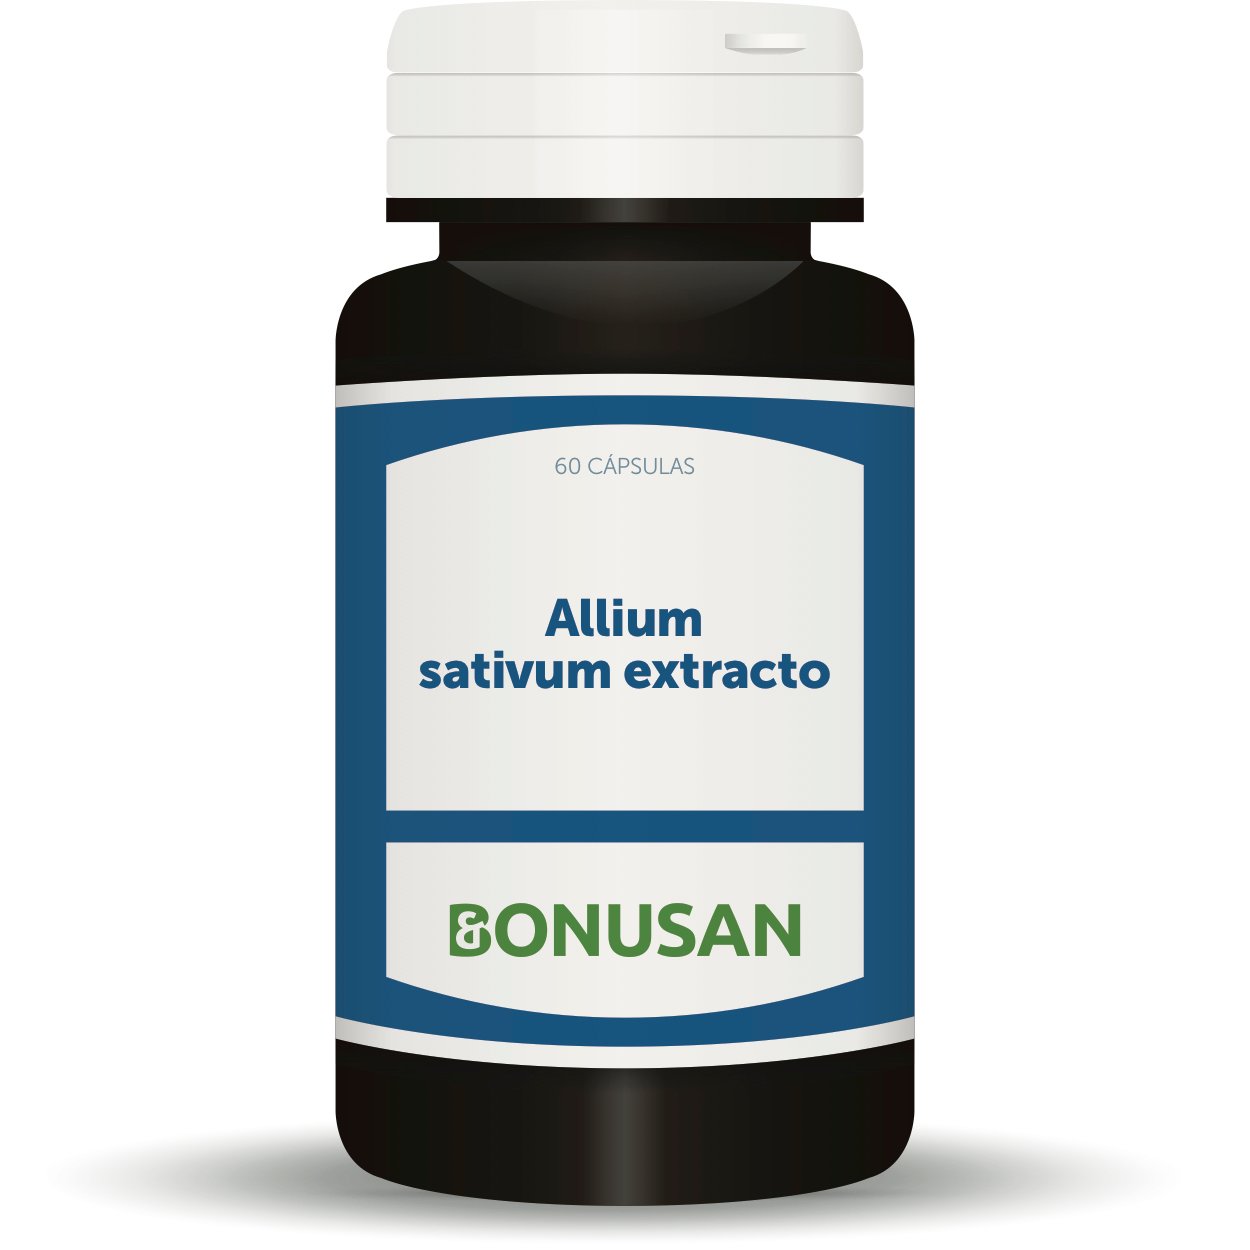 Bonusan Allium Sativum Extracto, 60 Tabletas| Farmacia Barata